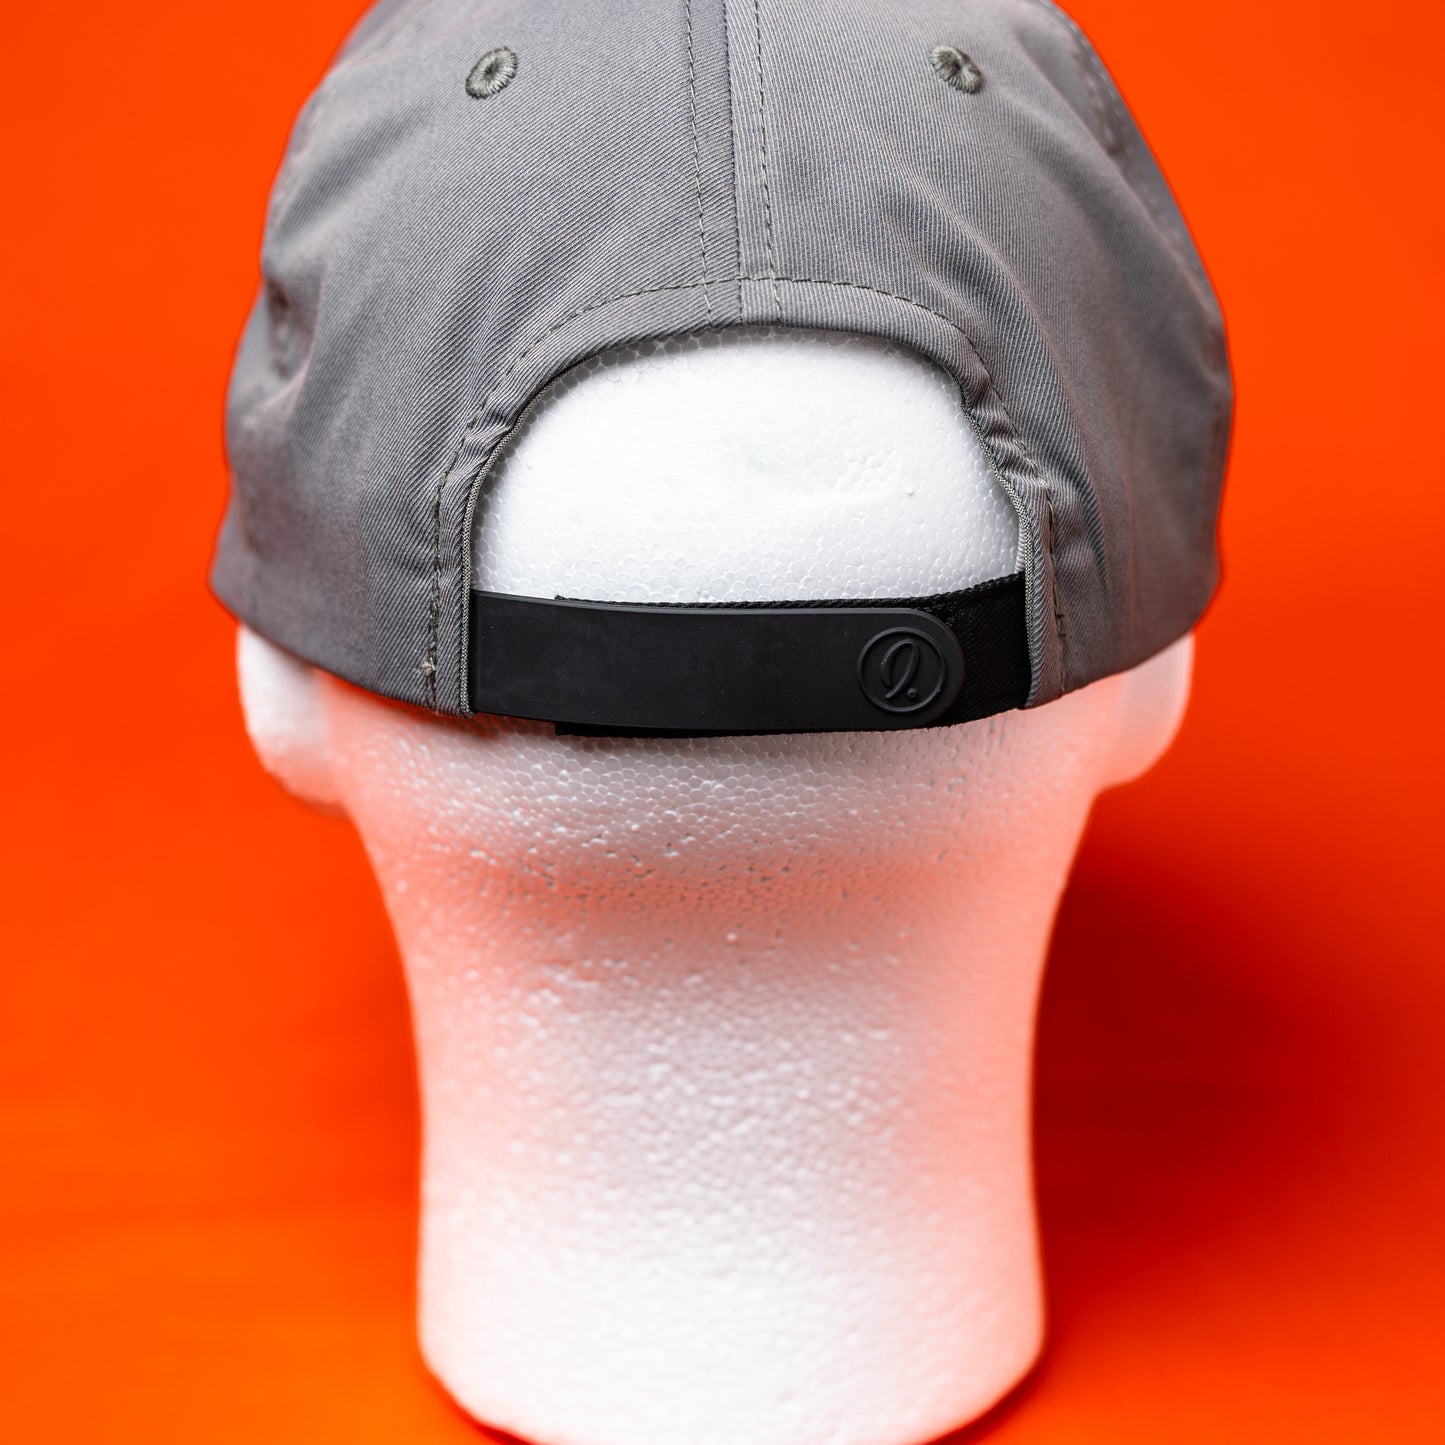 Mid-Crown Cincy Hat - Grey